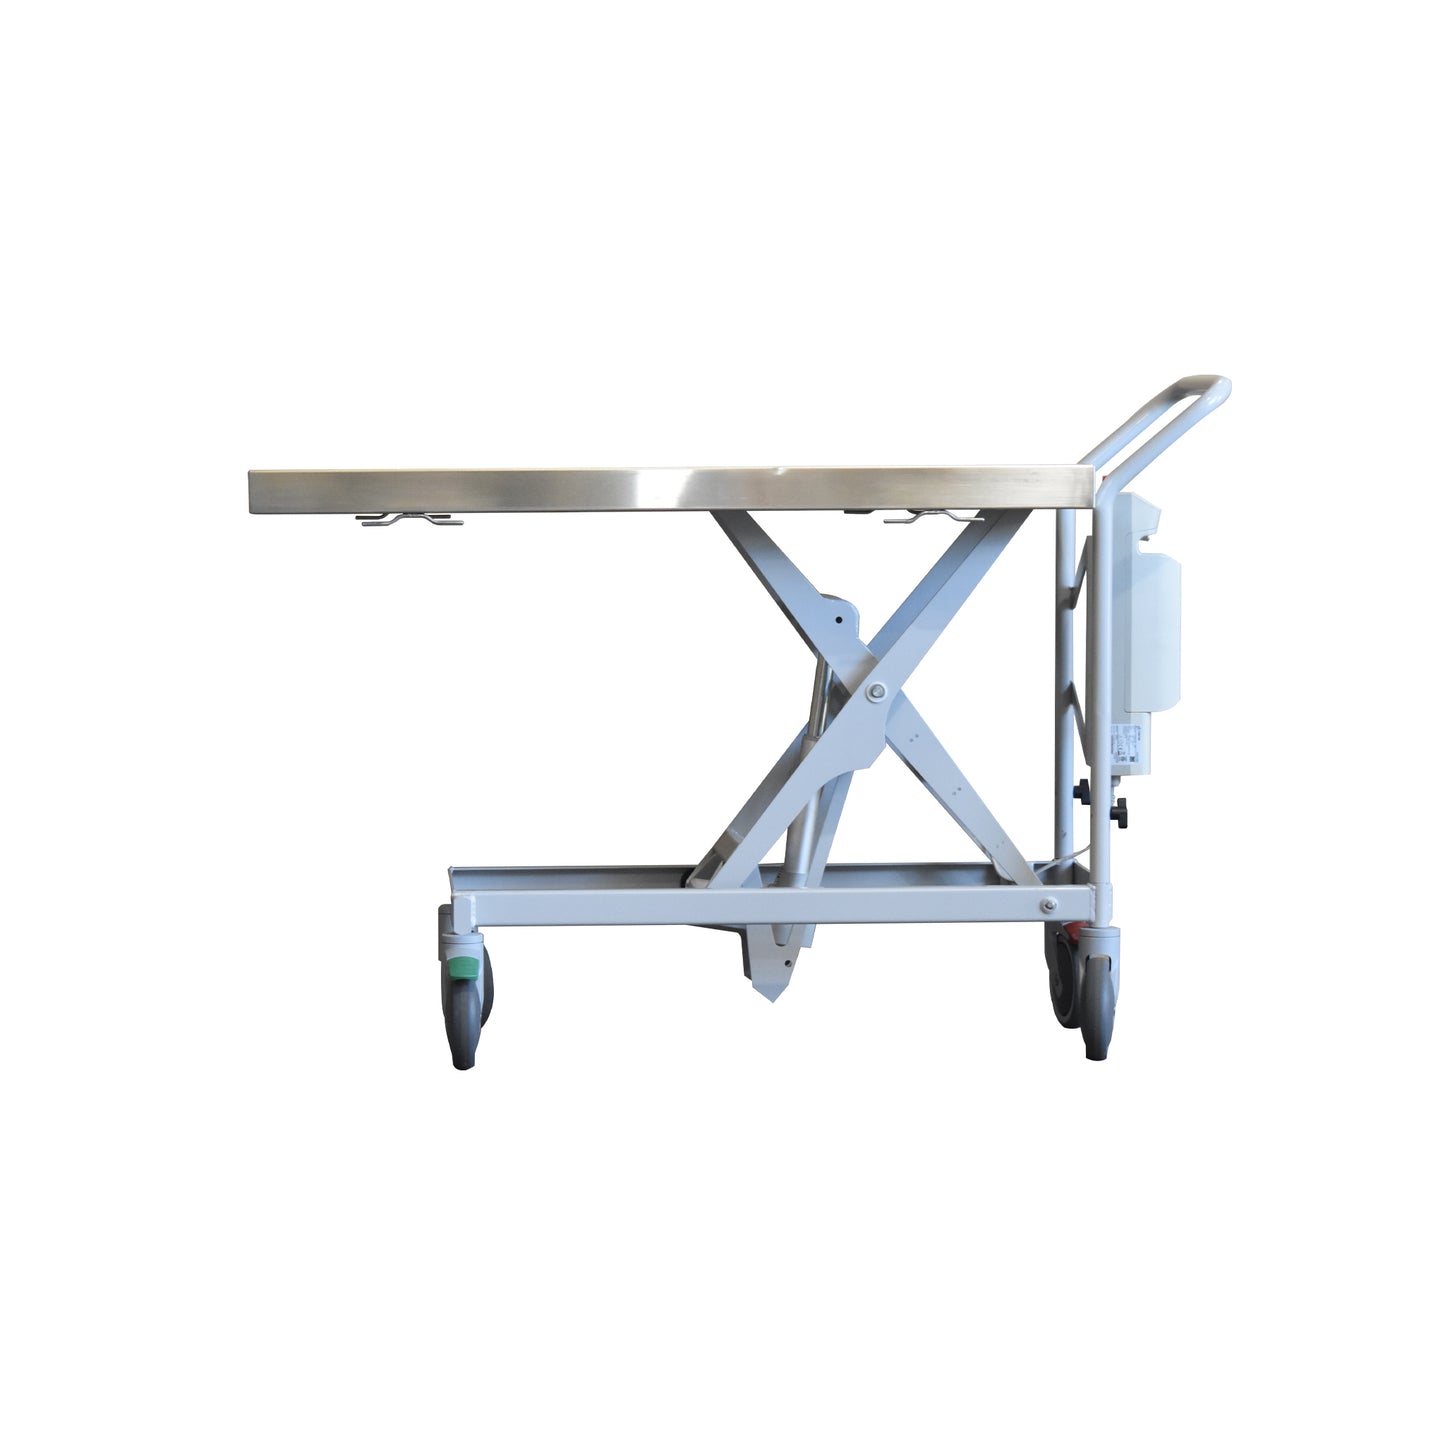 Electric Scissor Lift Table, 1200mm x 540mm x 860mm